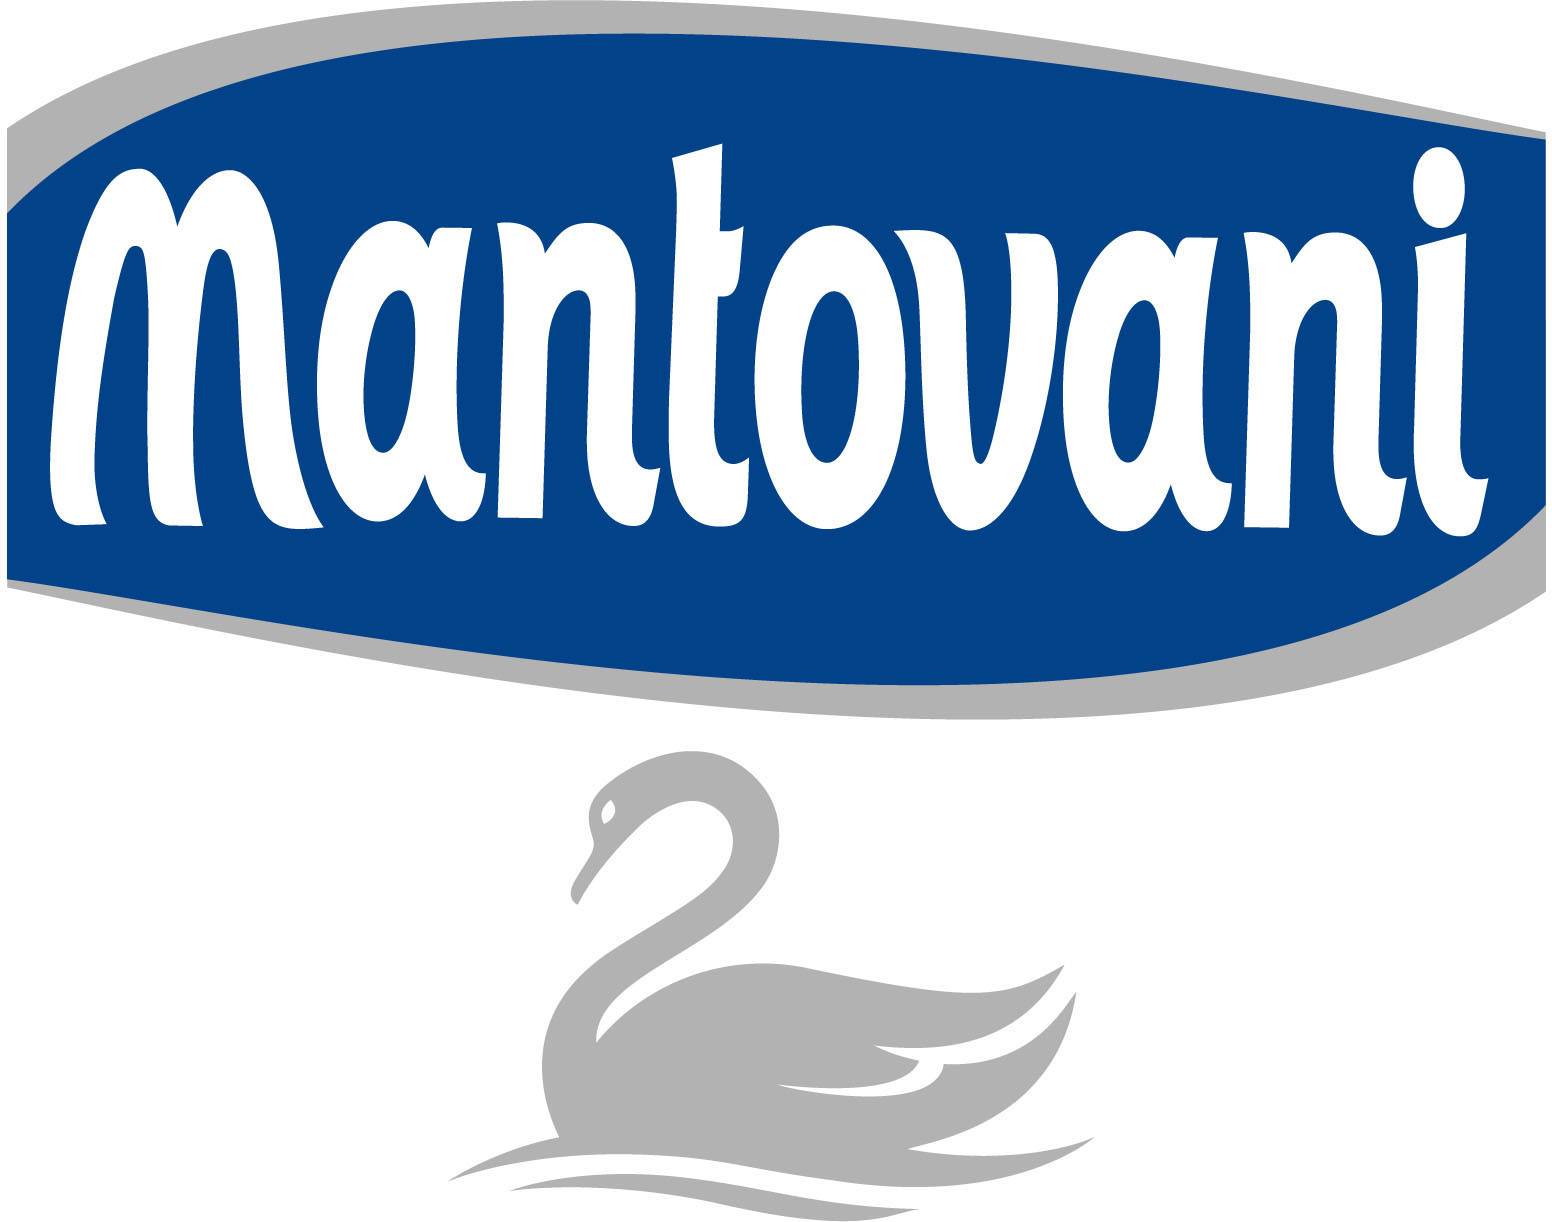 Mantovani